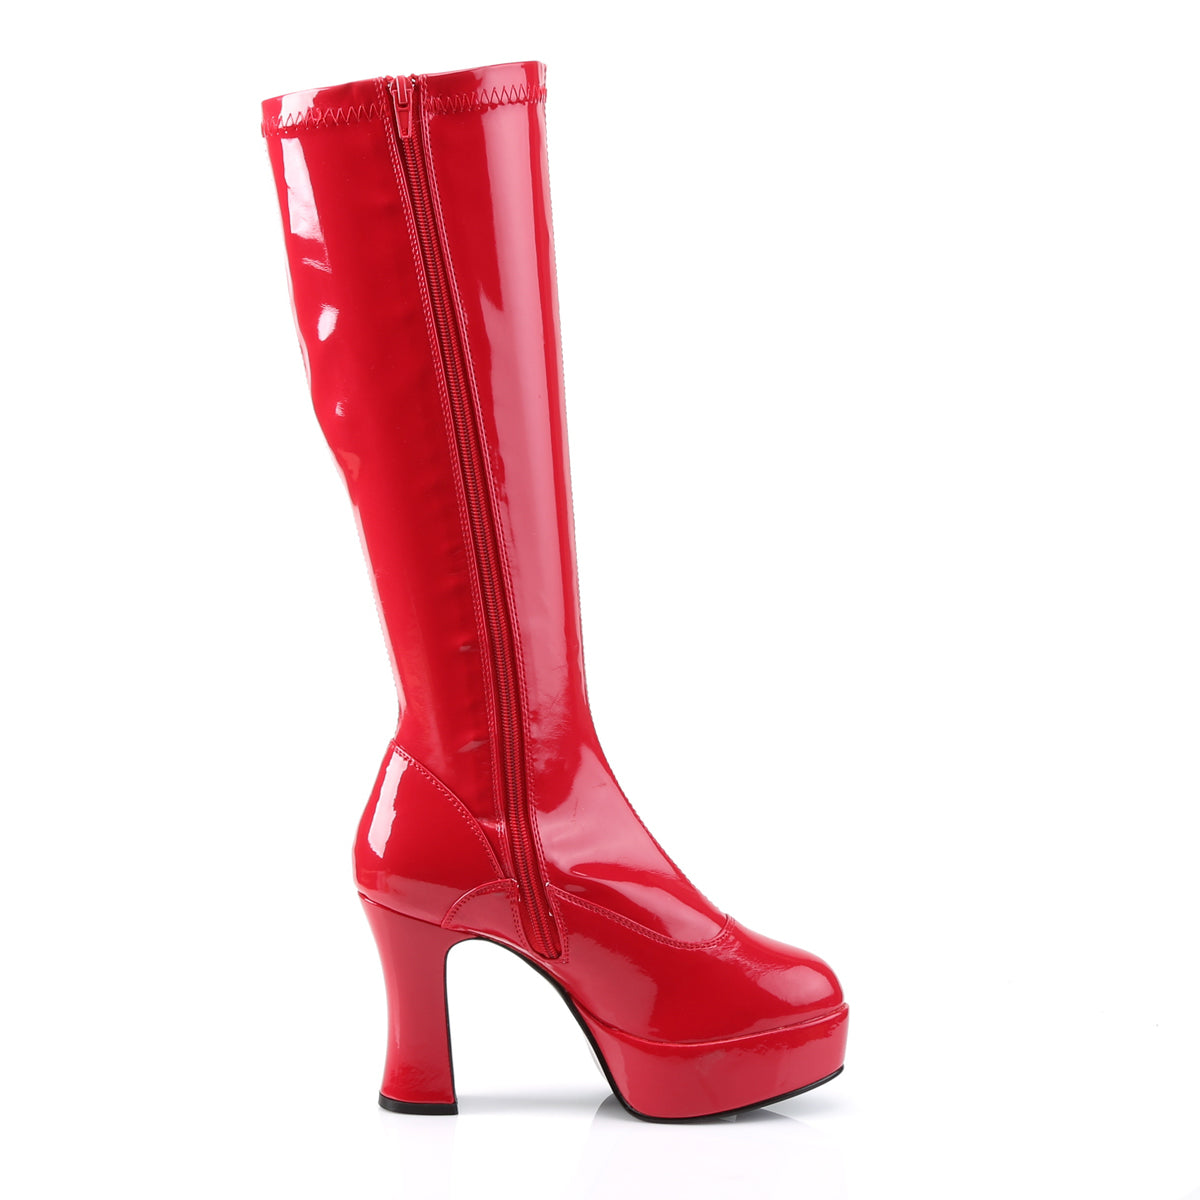 EXOTICA-2000 Funtasma 4 Inch Heel Red Women's Boots Funtasma Costume Shoes Fancy Dress